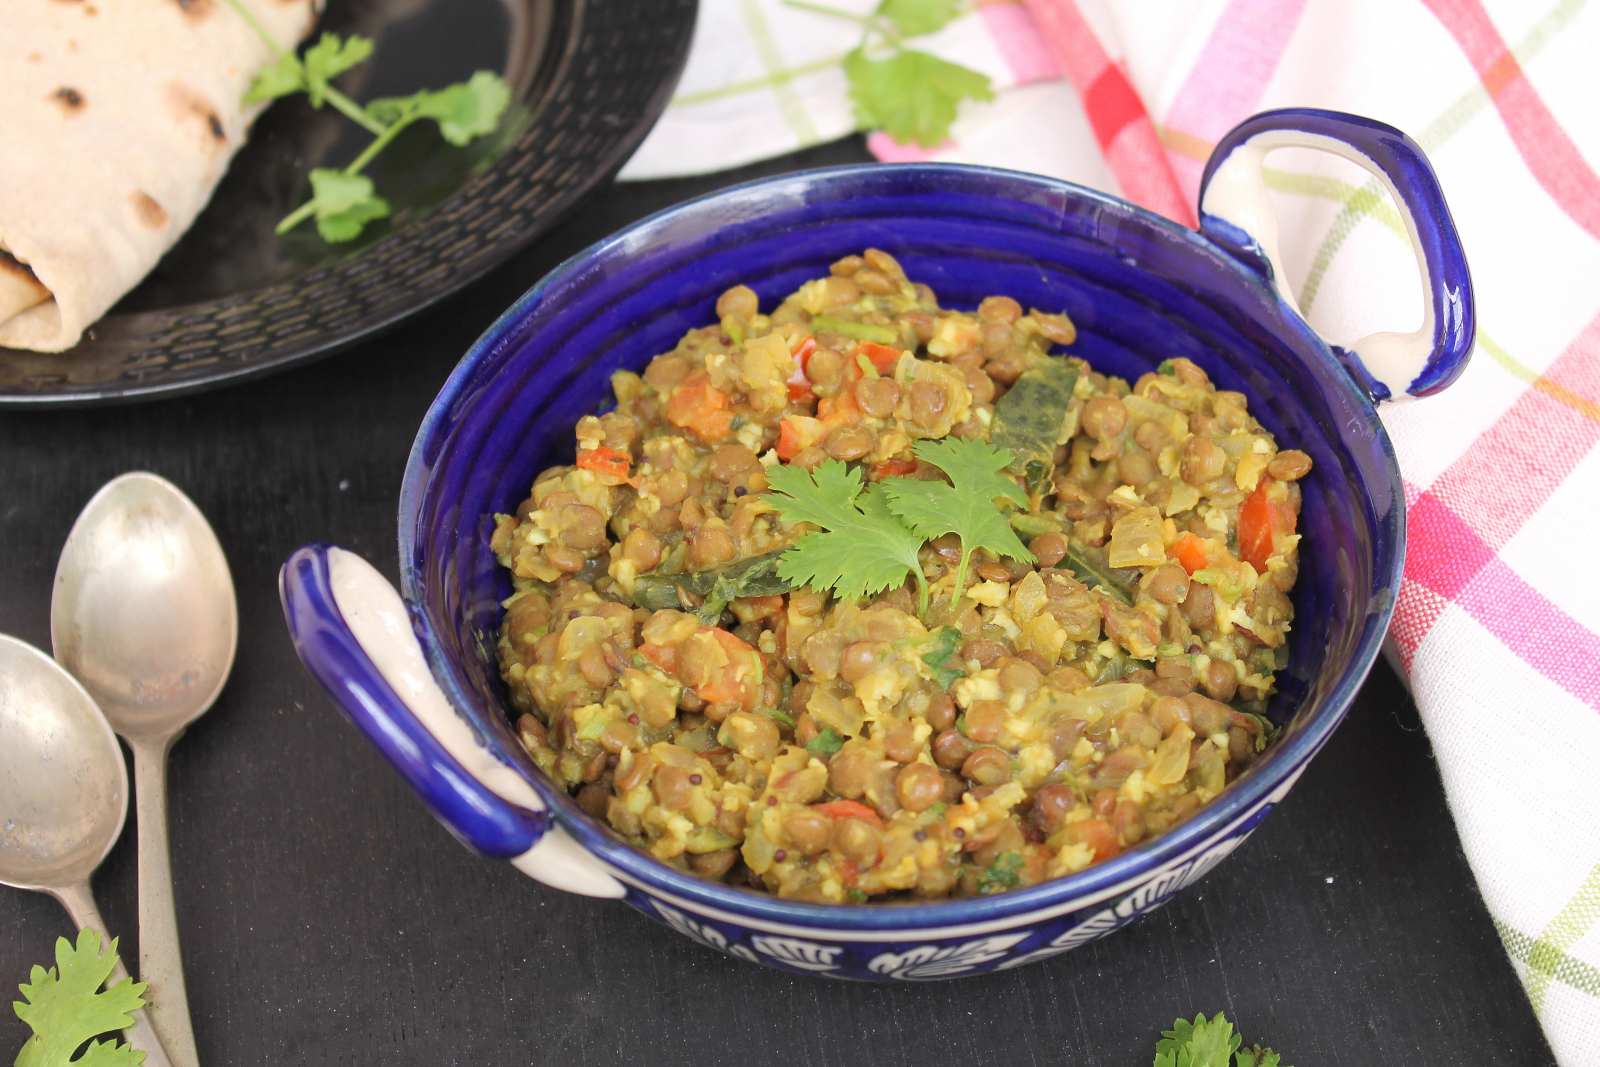 Goan Masoorchi Usali Recipe (Black Lentil Stir Fry)